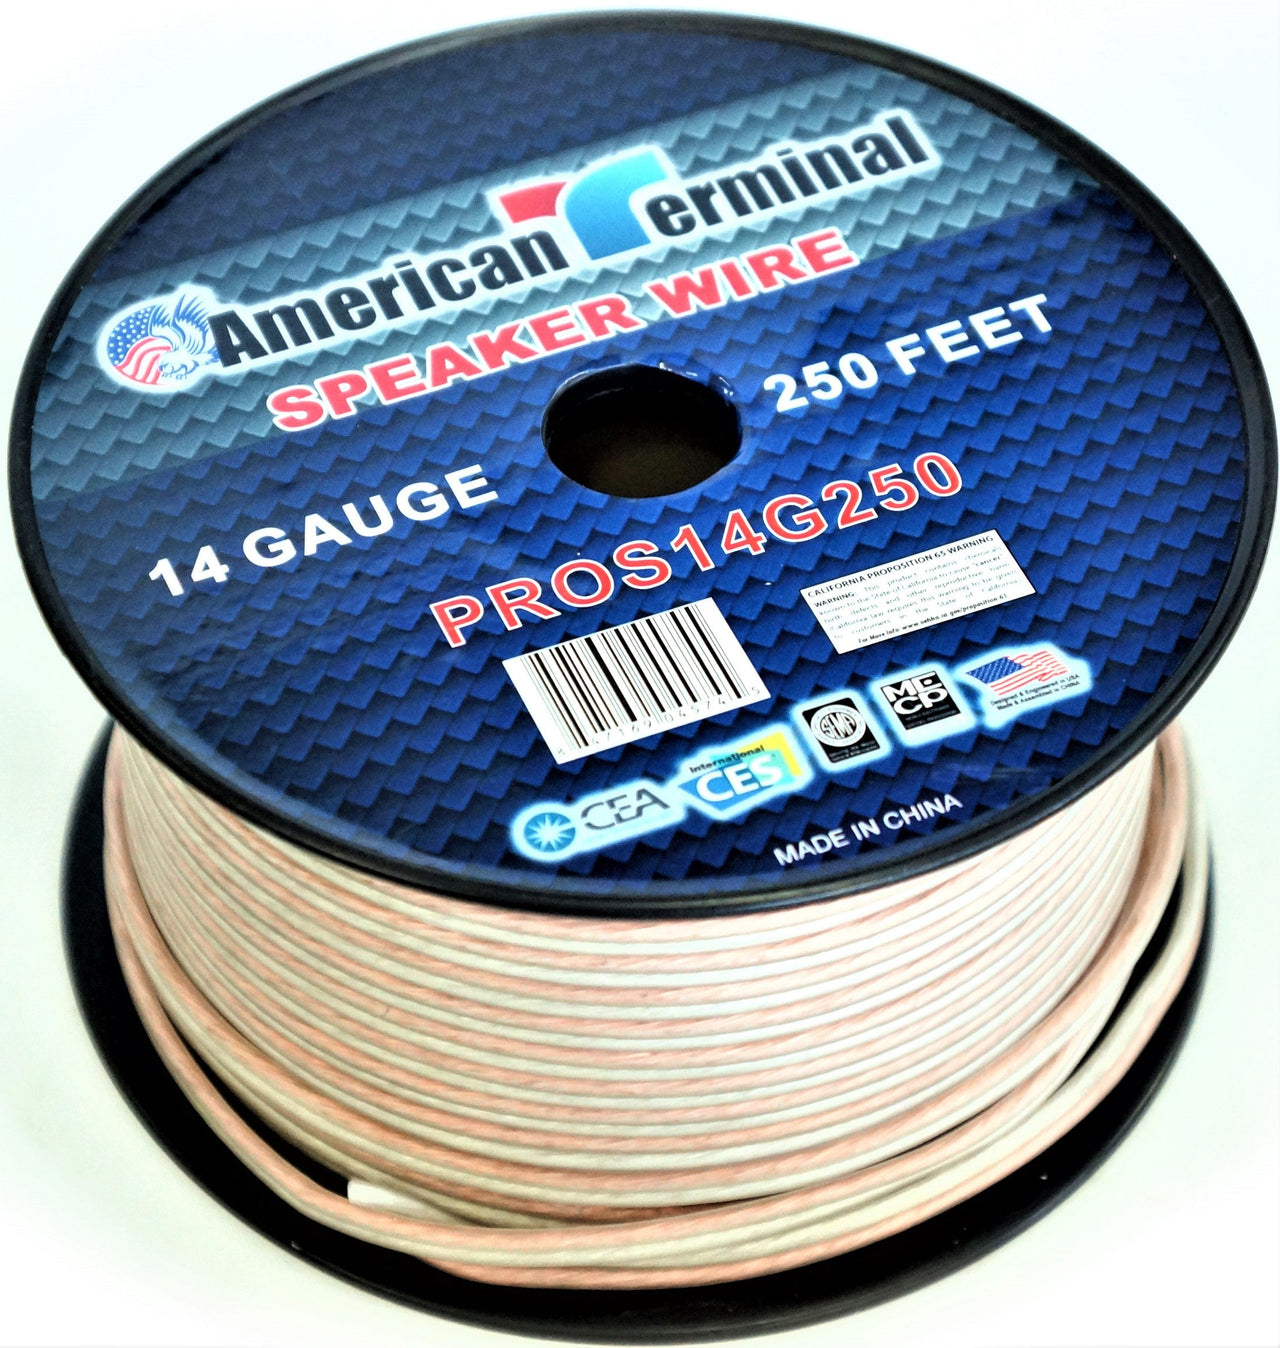 2 American Terminal PROS14250 14 Gauge Speaker Wire<br/> 250' 14 Gauge PRO PA DJ Car Home Marine Audio Speaker Wire Cable Spool